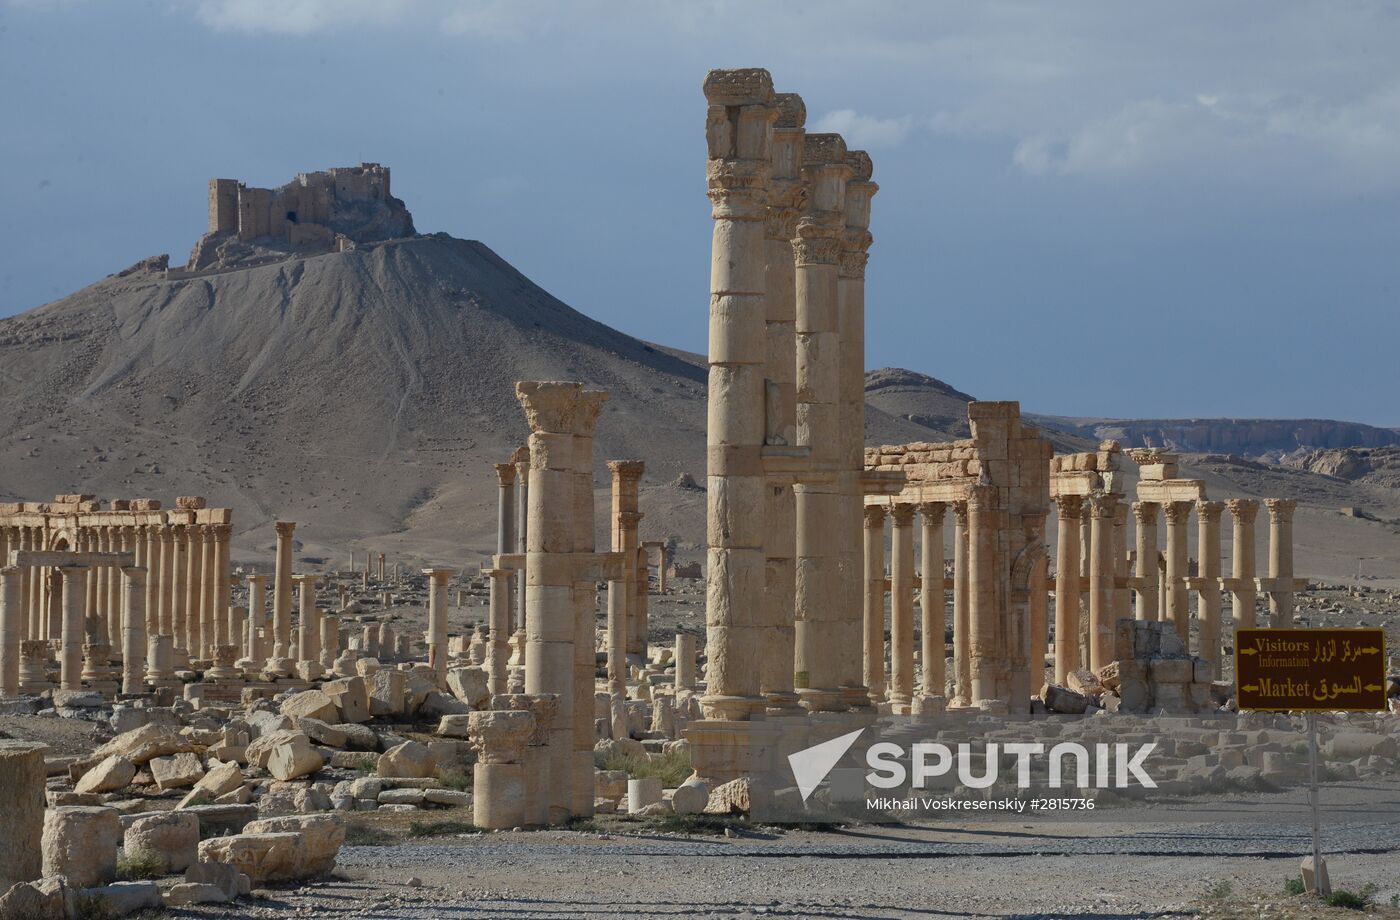 Ancient Palmyra